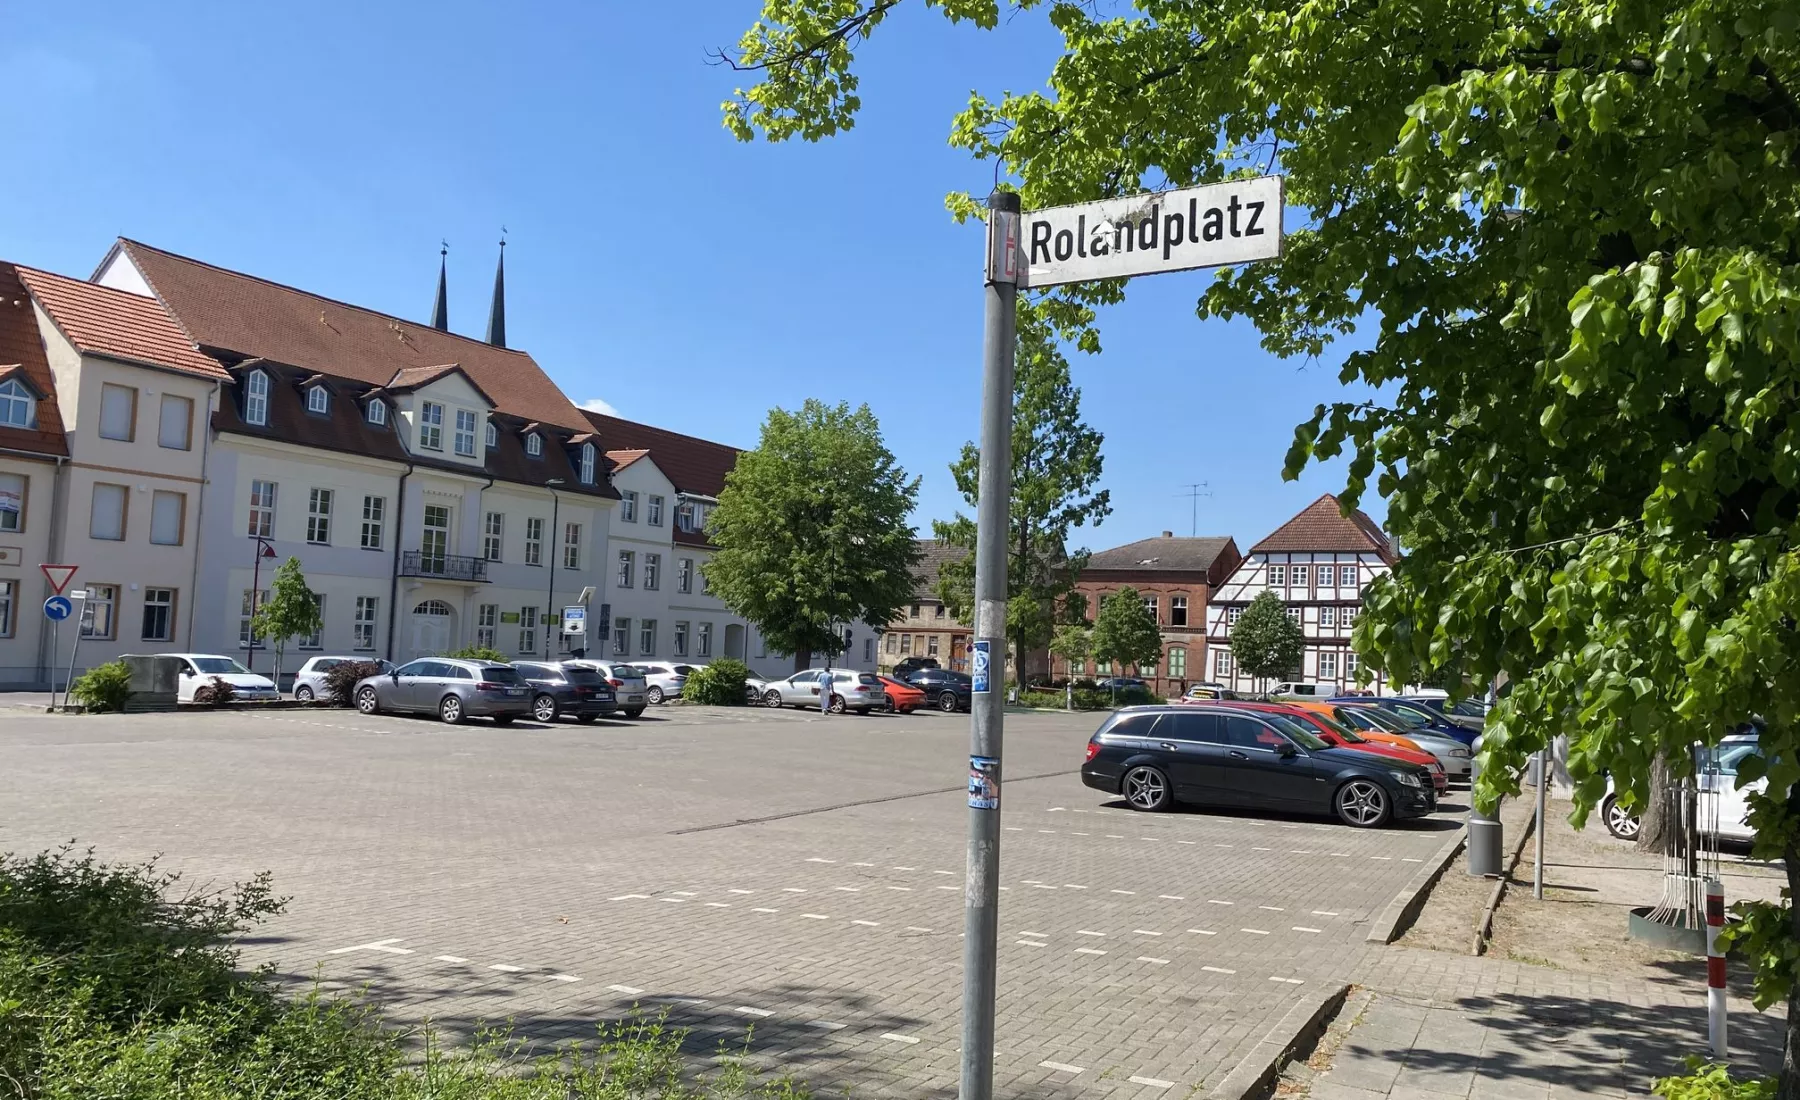 Rolandplatz